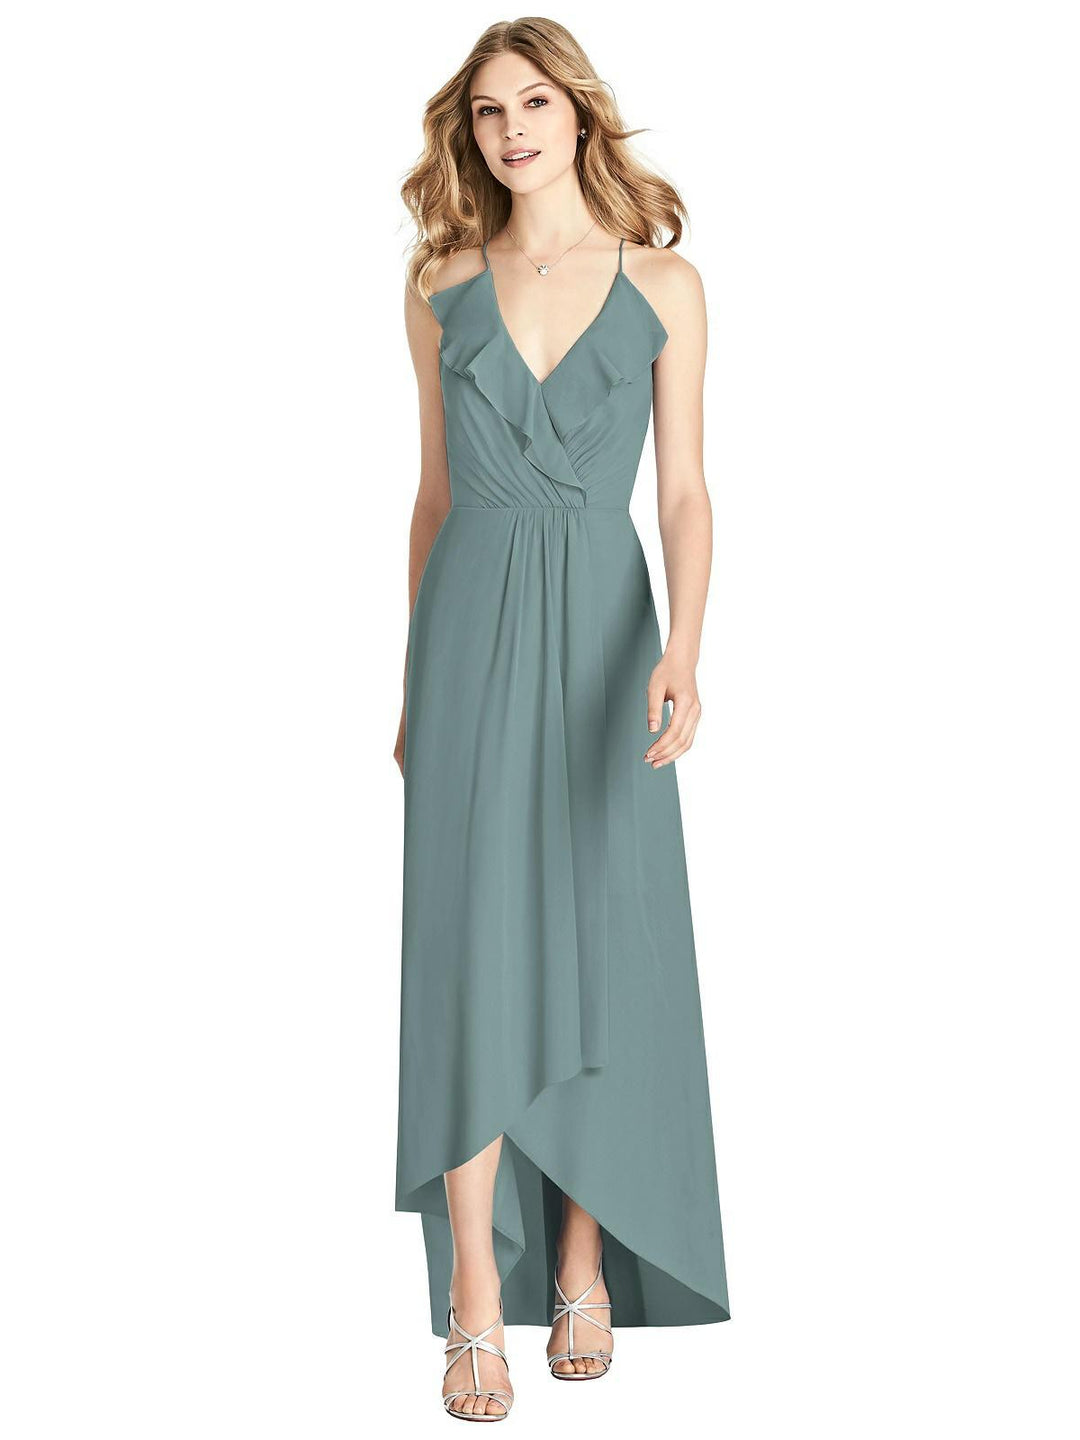 Ruffled Wrap High-Low Maxi Dress by Jenny Packham Style JP1006 Size 12